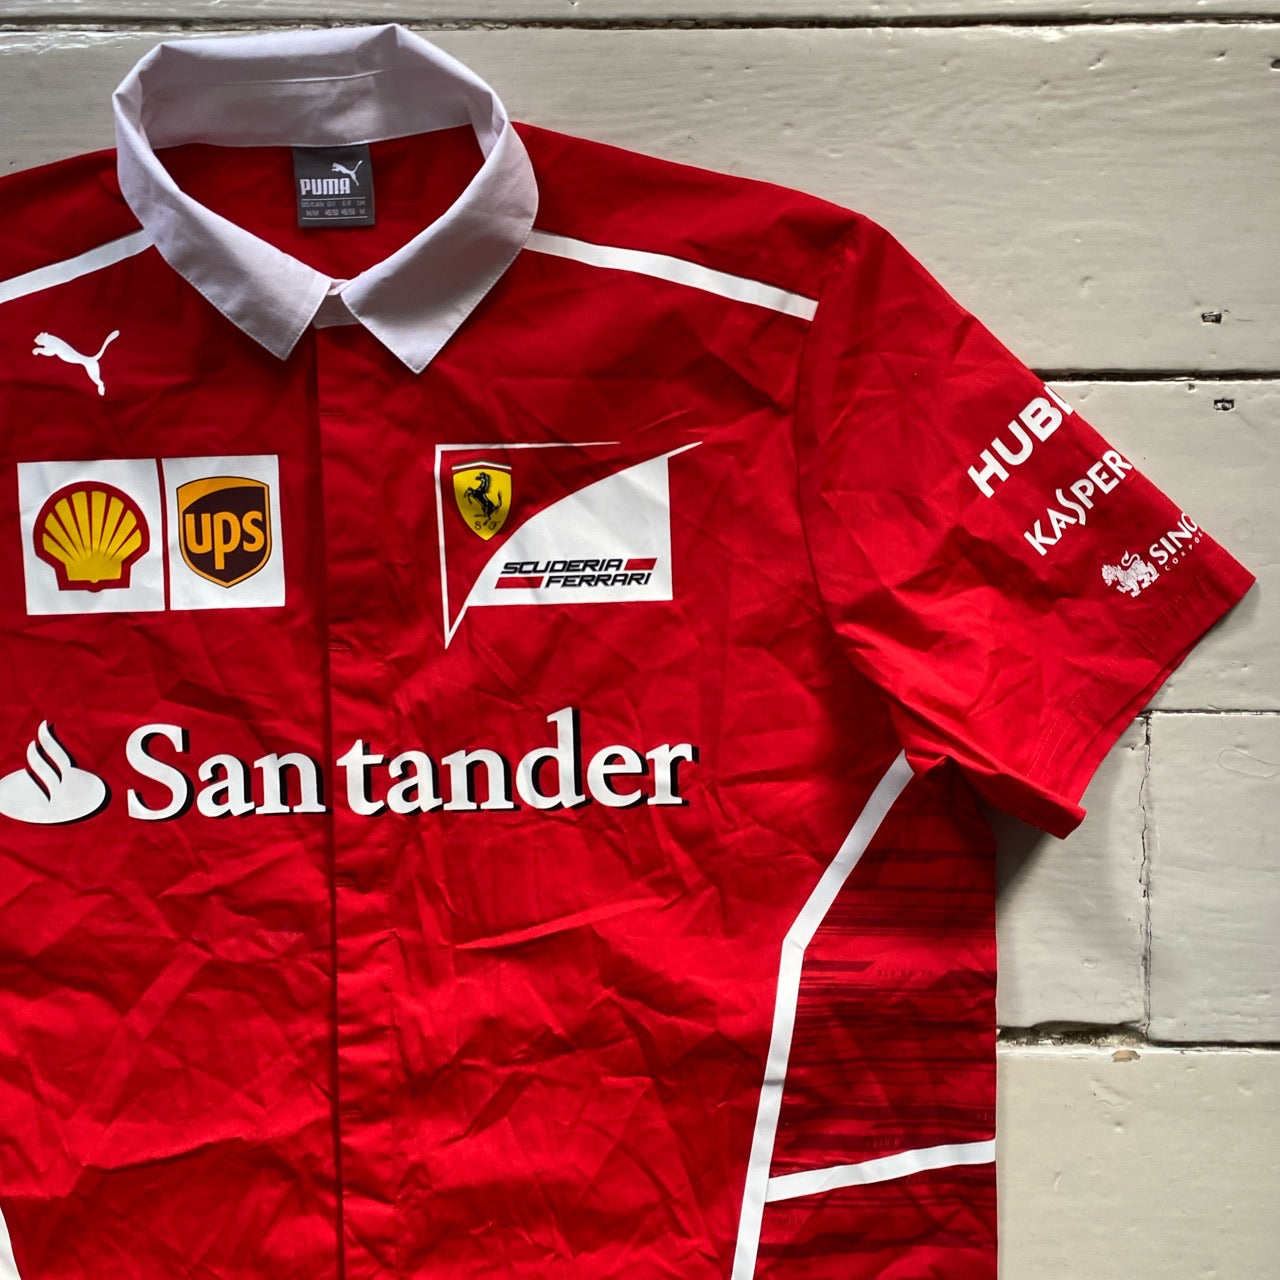 Ferrari Puma Formula One Shirt (Medium)